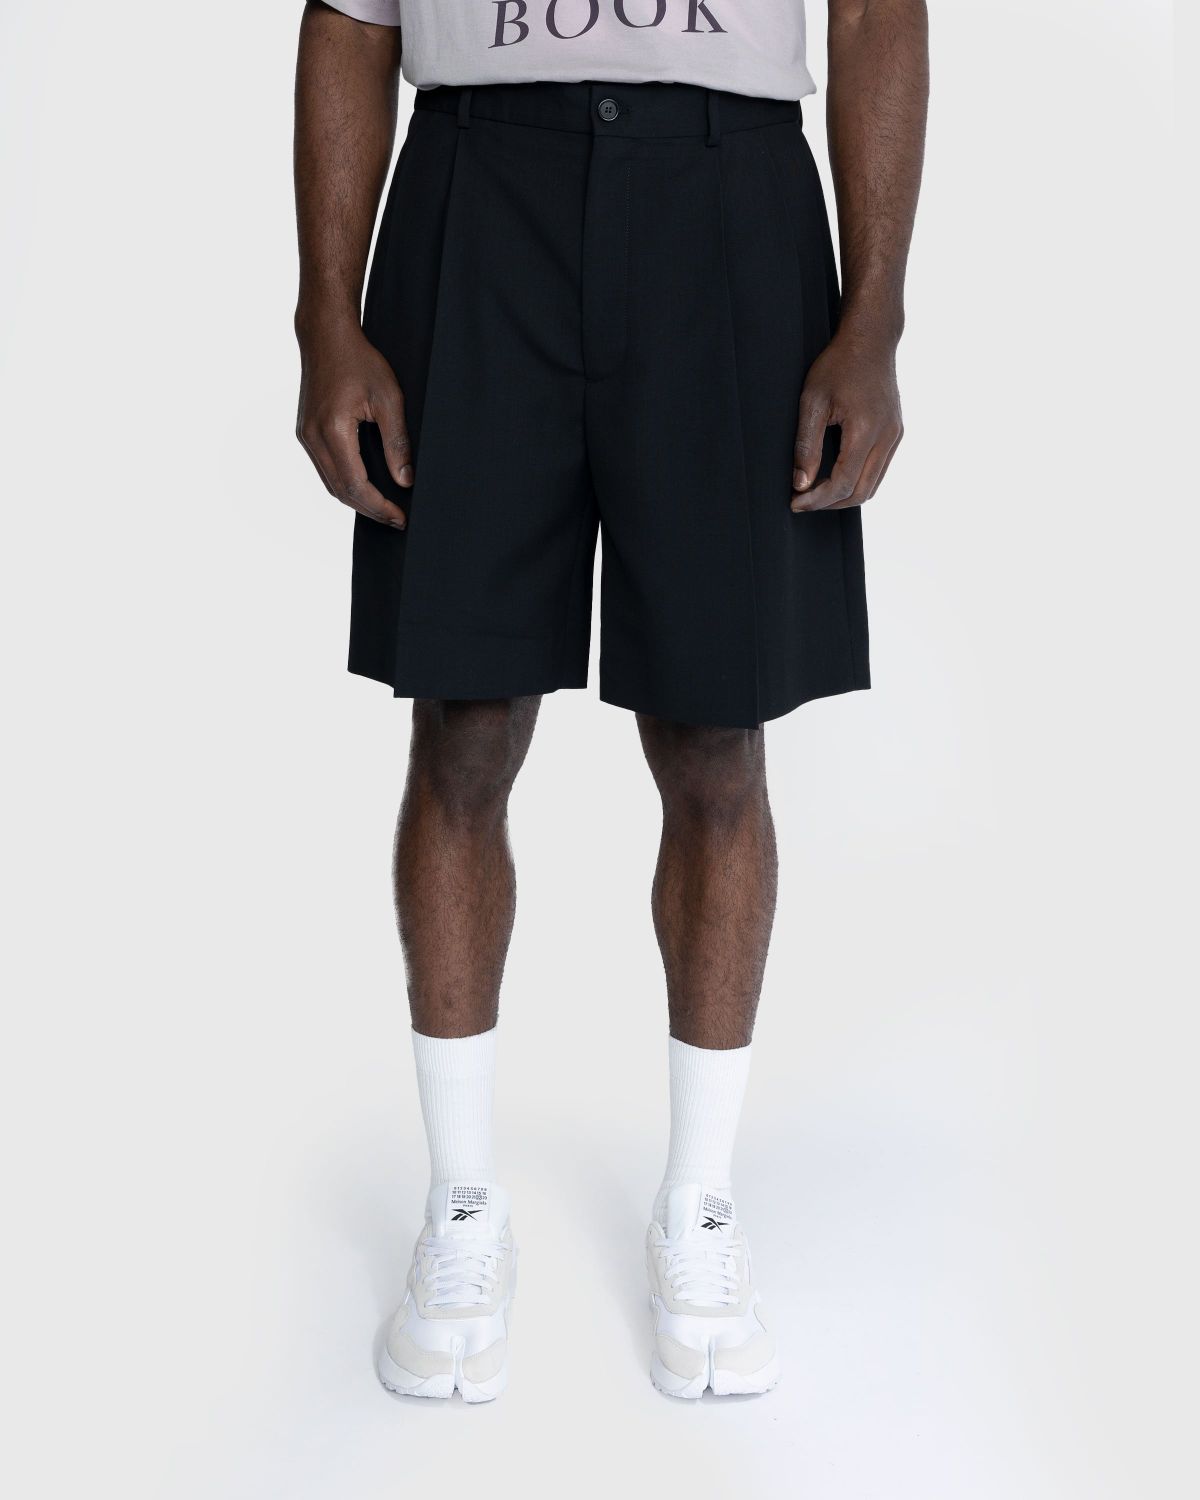 Acne Studios – Tailored Pleated Shorts Black - Shorts - Black - Image 2